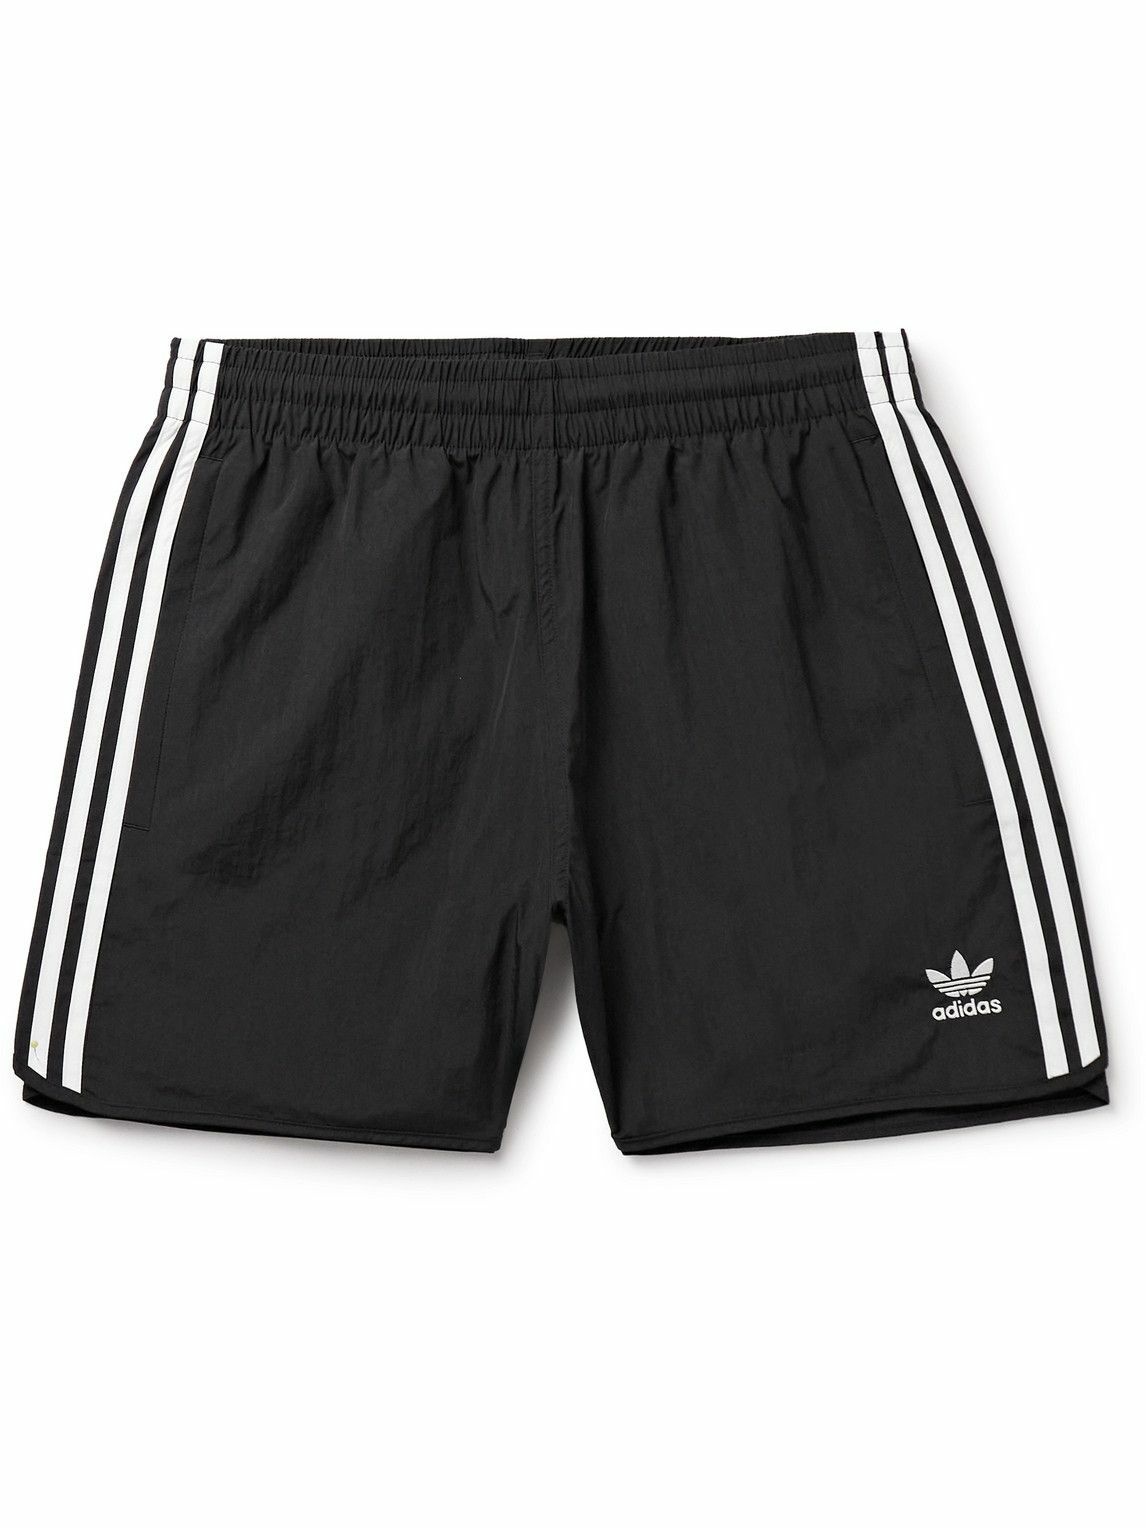 adidas Originals 3-Stripe Shorts Originals Trefoil Black Pink 3D adidas and Sweat